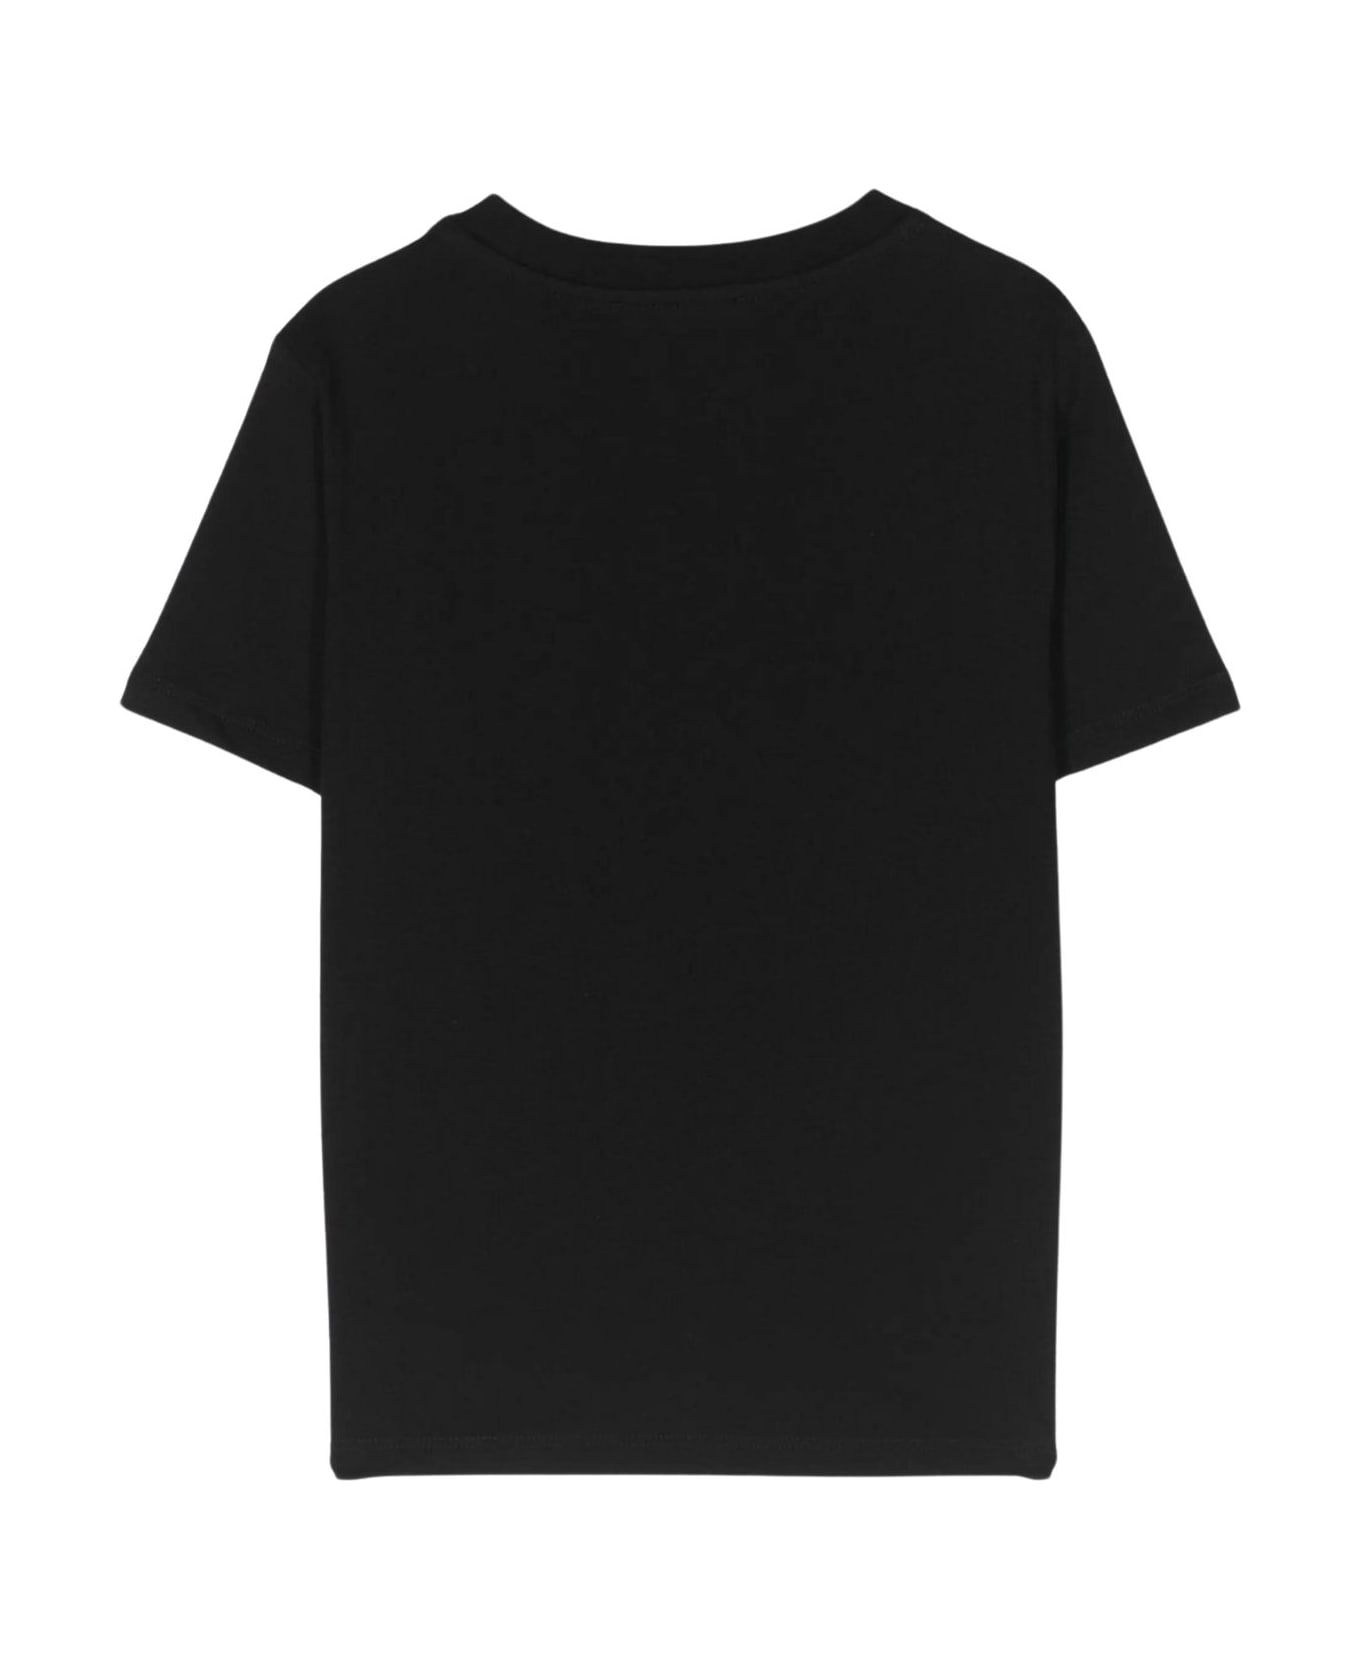 Balmain T Shirt - Black